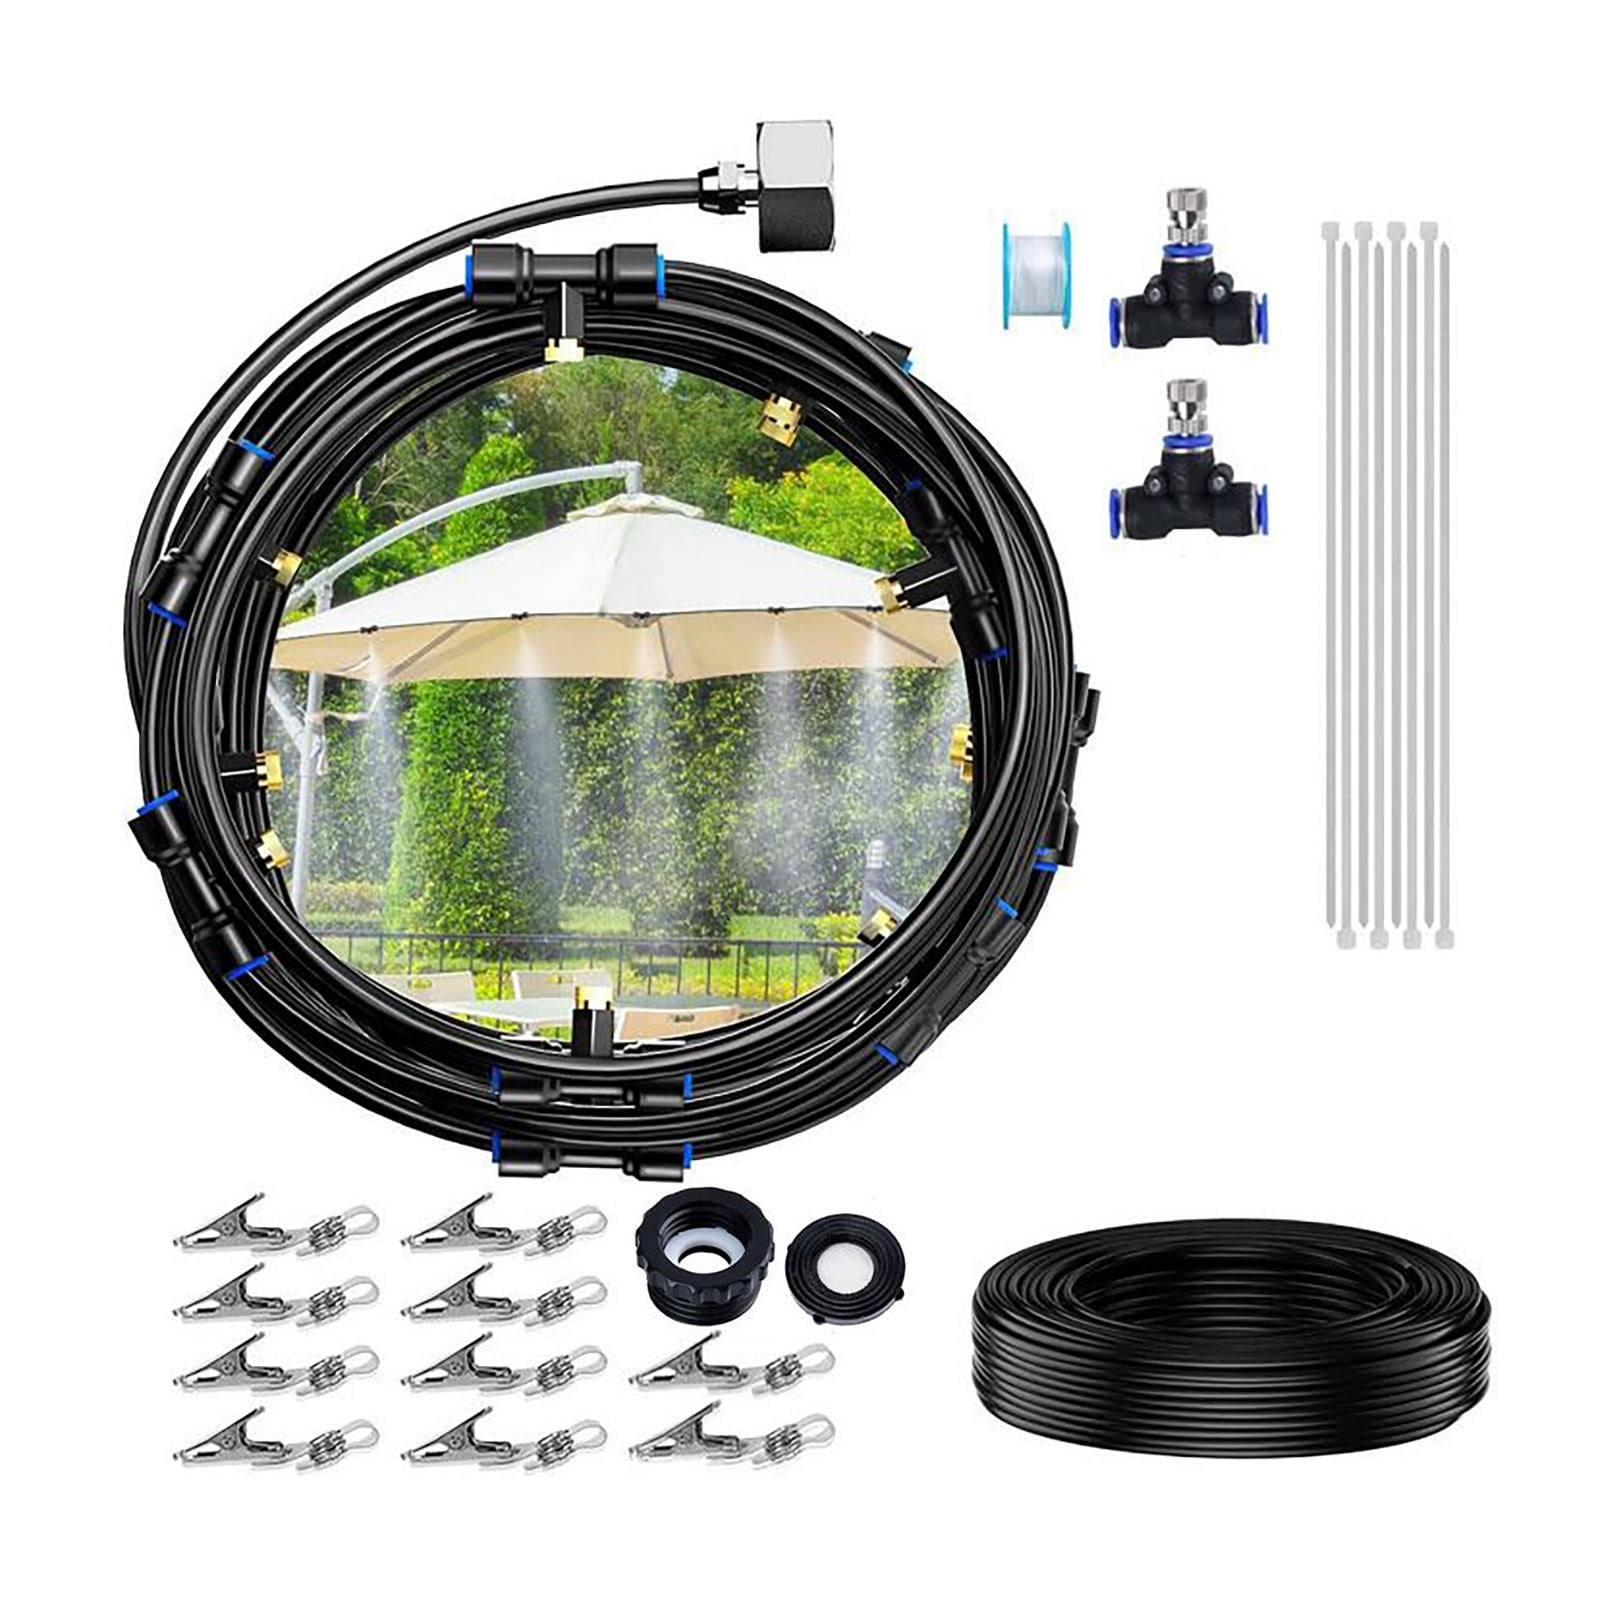 Delarsy Low Pressure Quick Plug Atomization Suit Outdoor Trampoline Sprinkler System